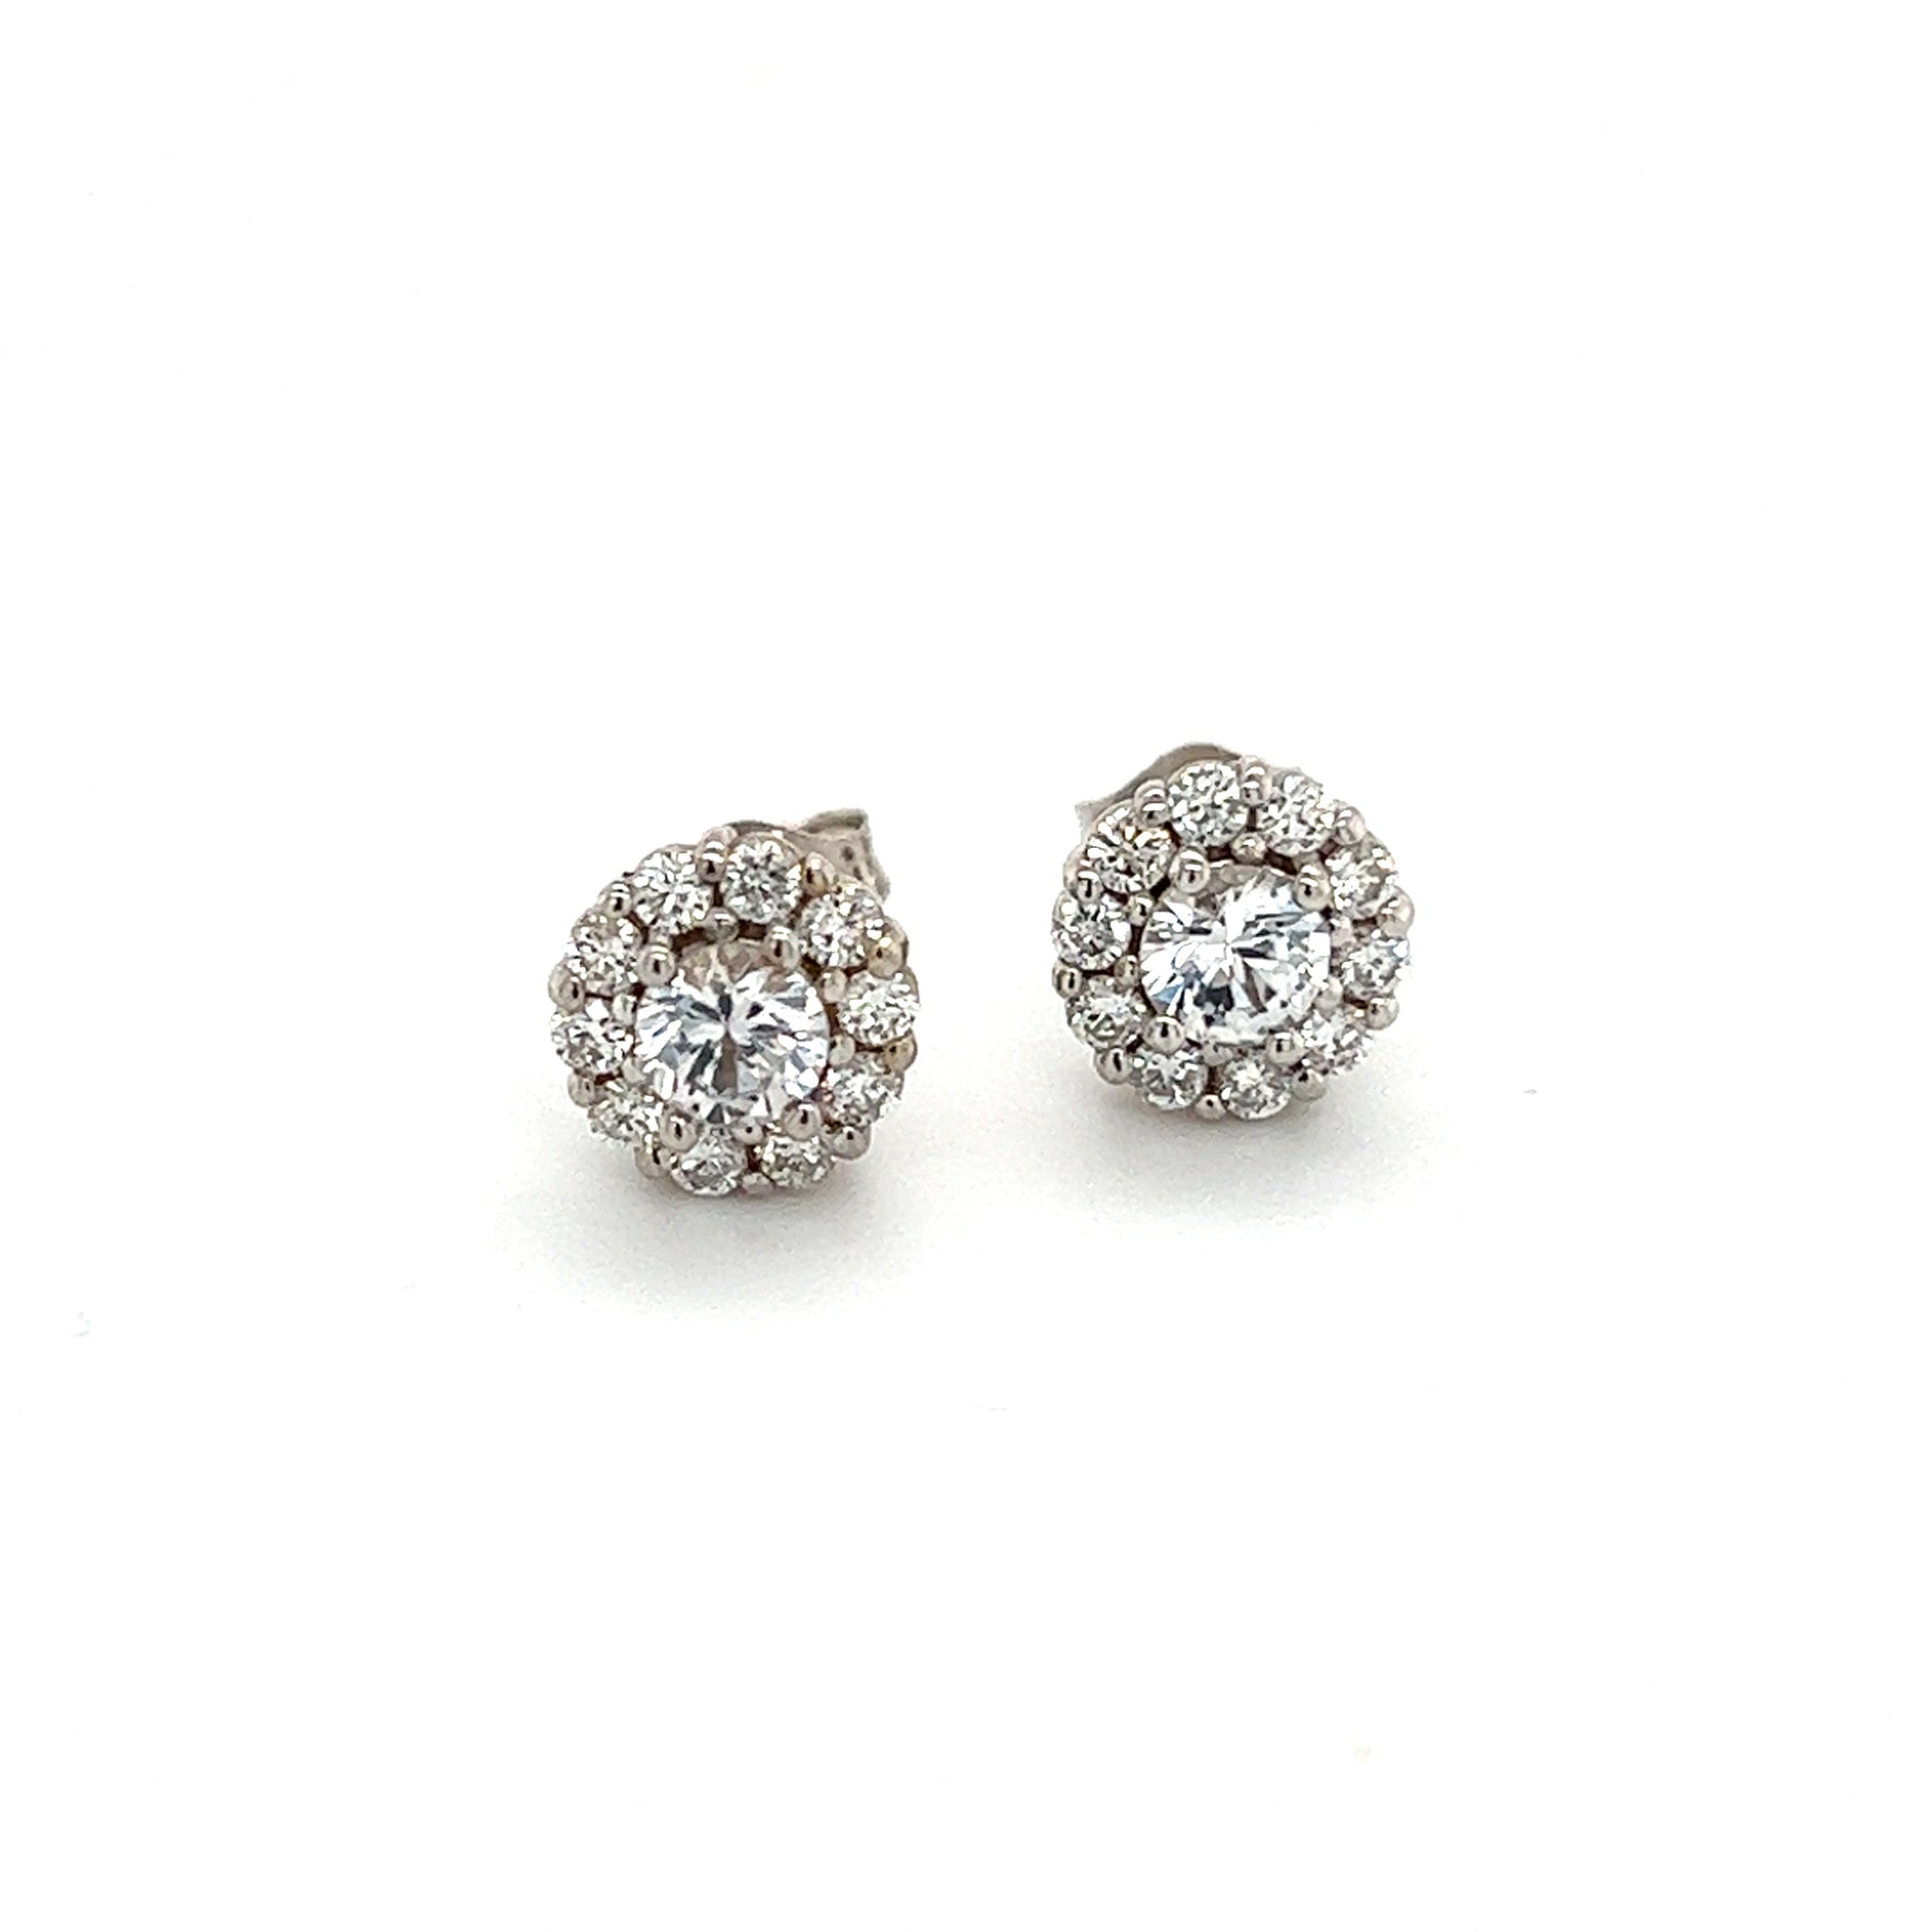 Natural Sapphire Diamond Earrings 14k Gold 1.25 TCW Certified $3,950 215096